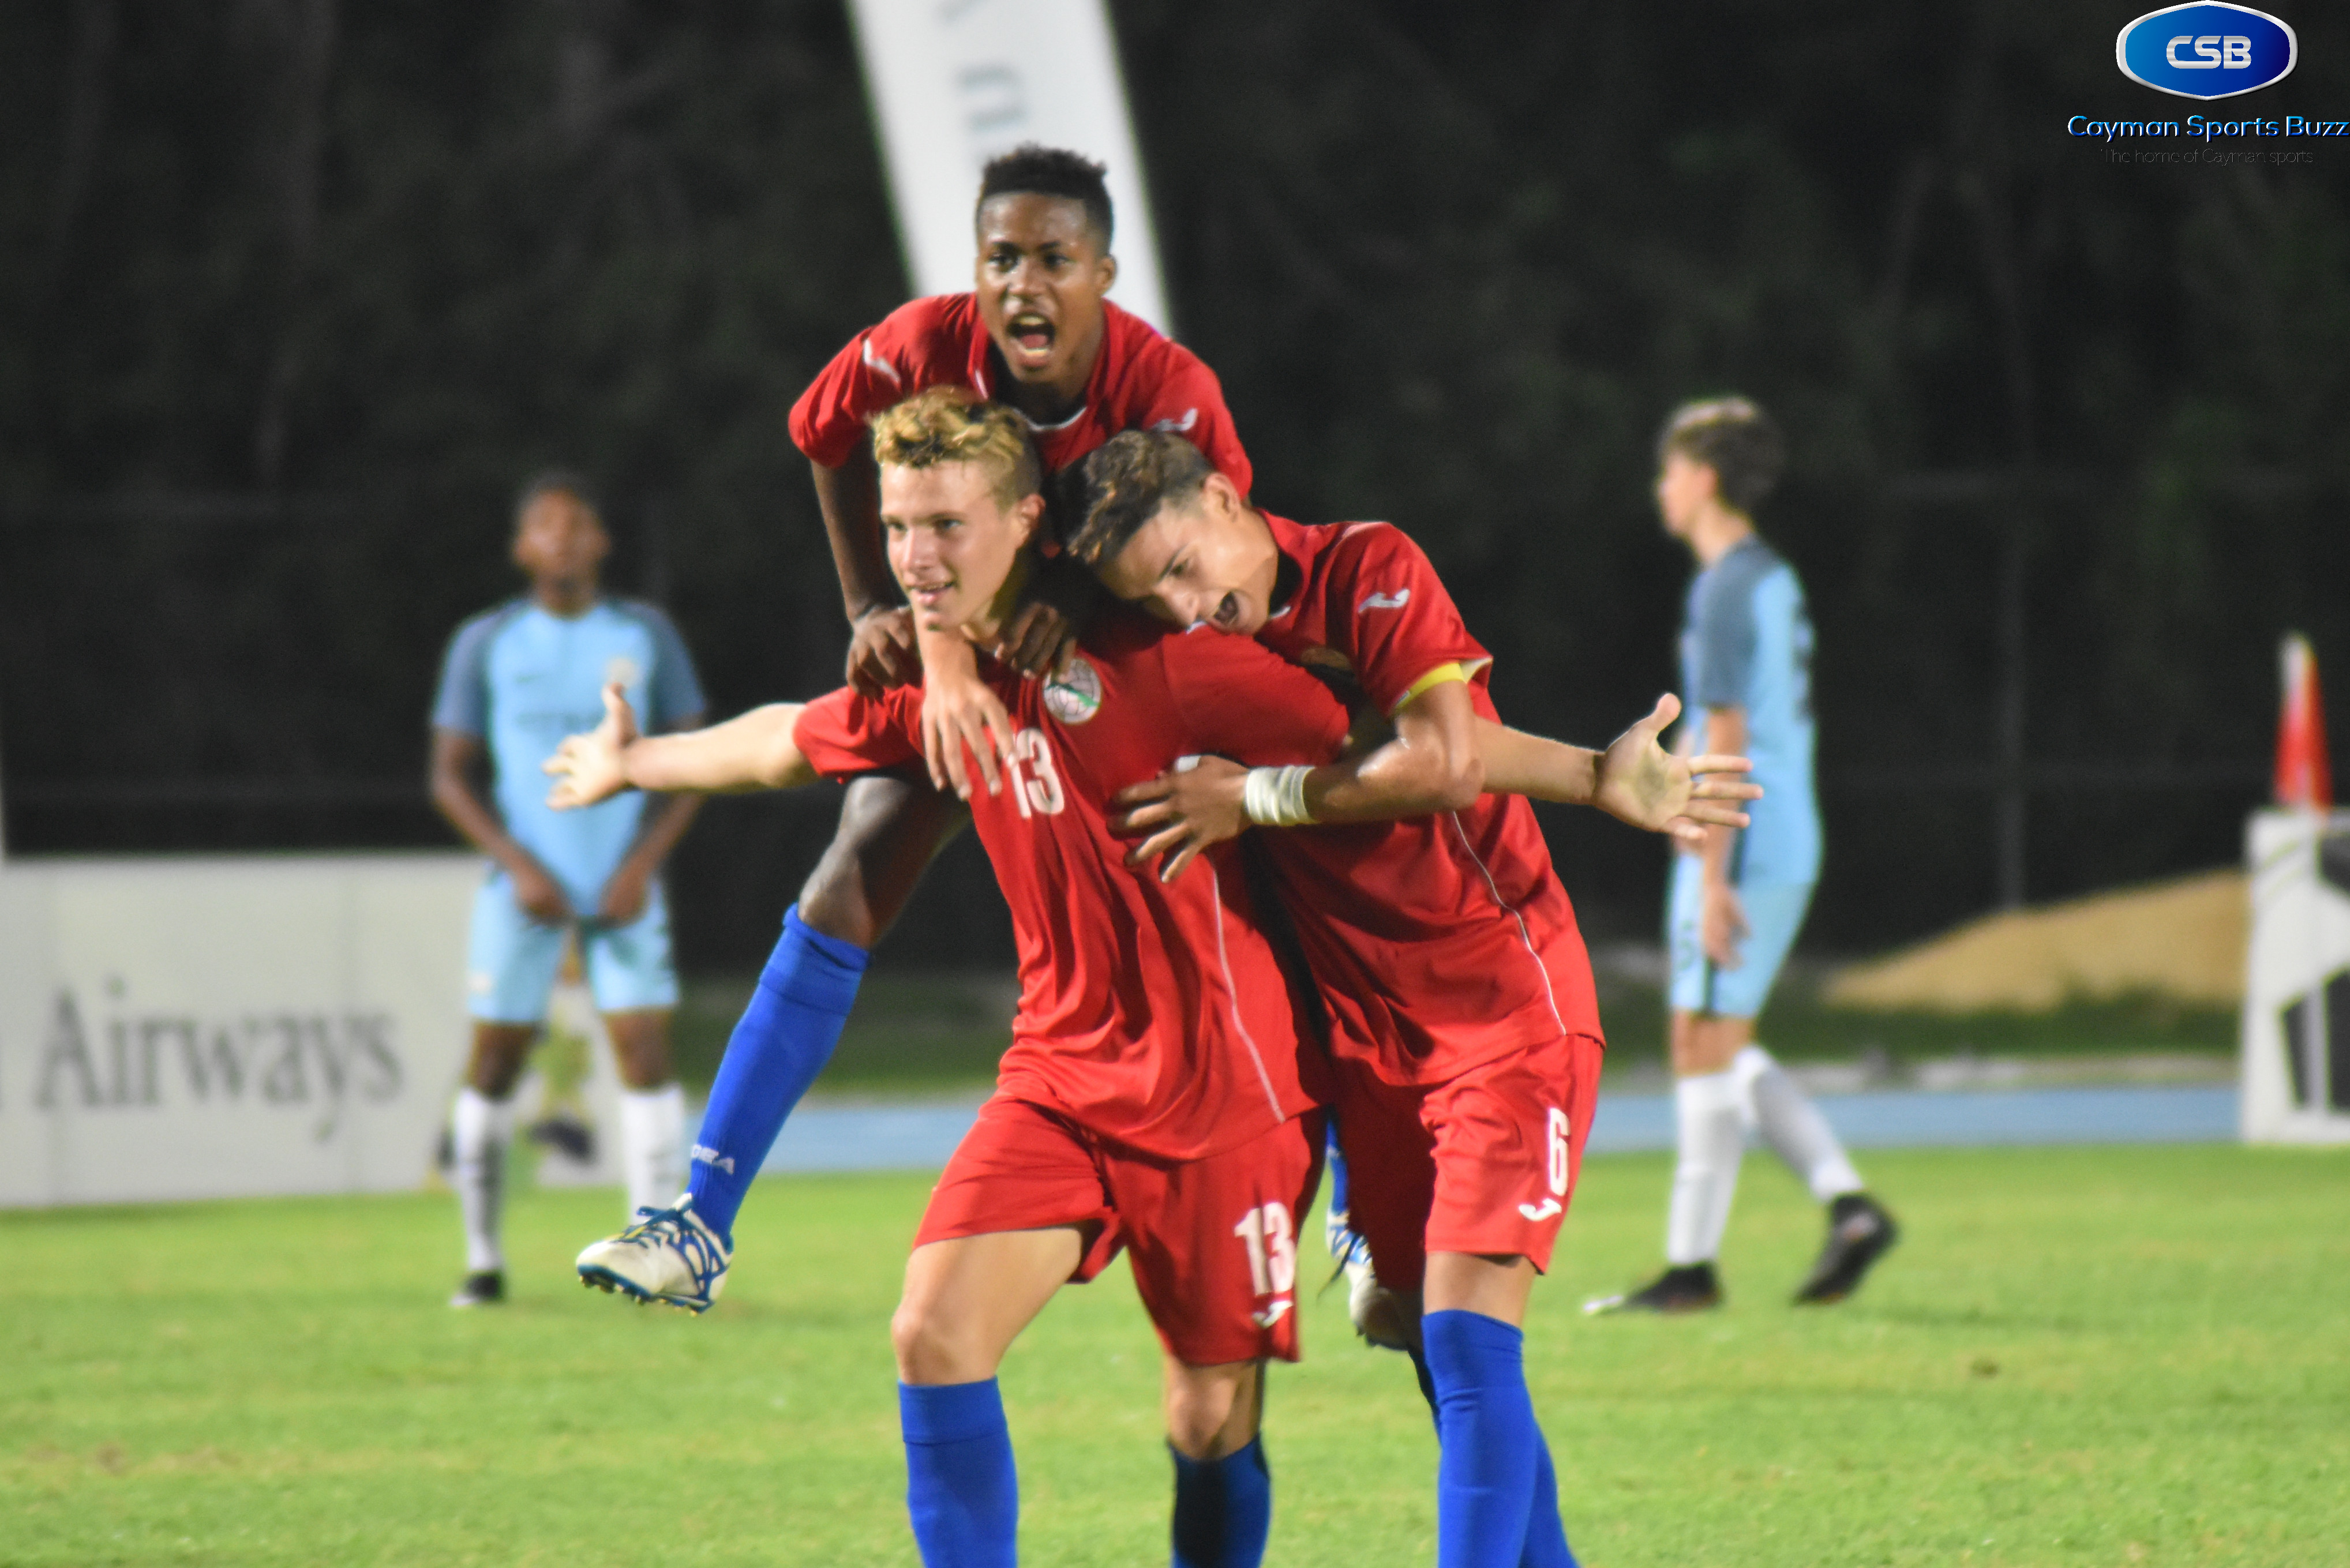 Cuba wins U-15 Youth Football Cup - Cayman Compass